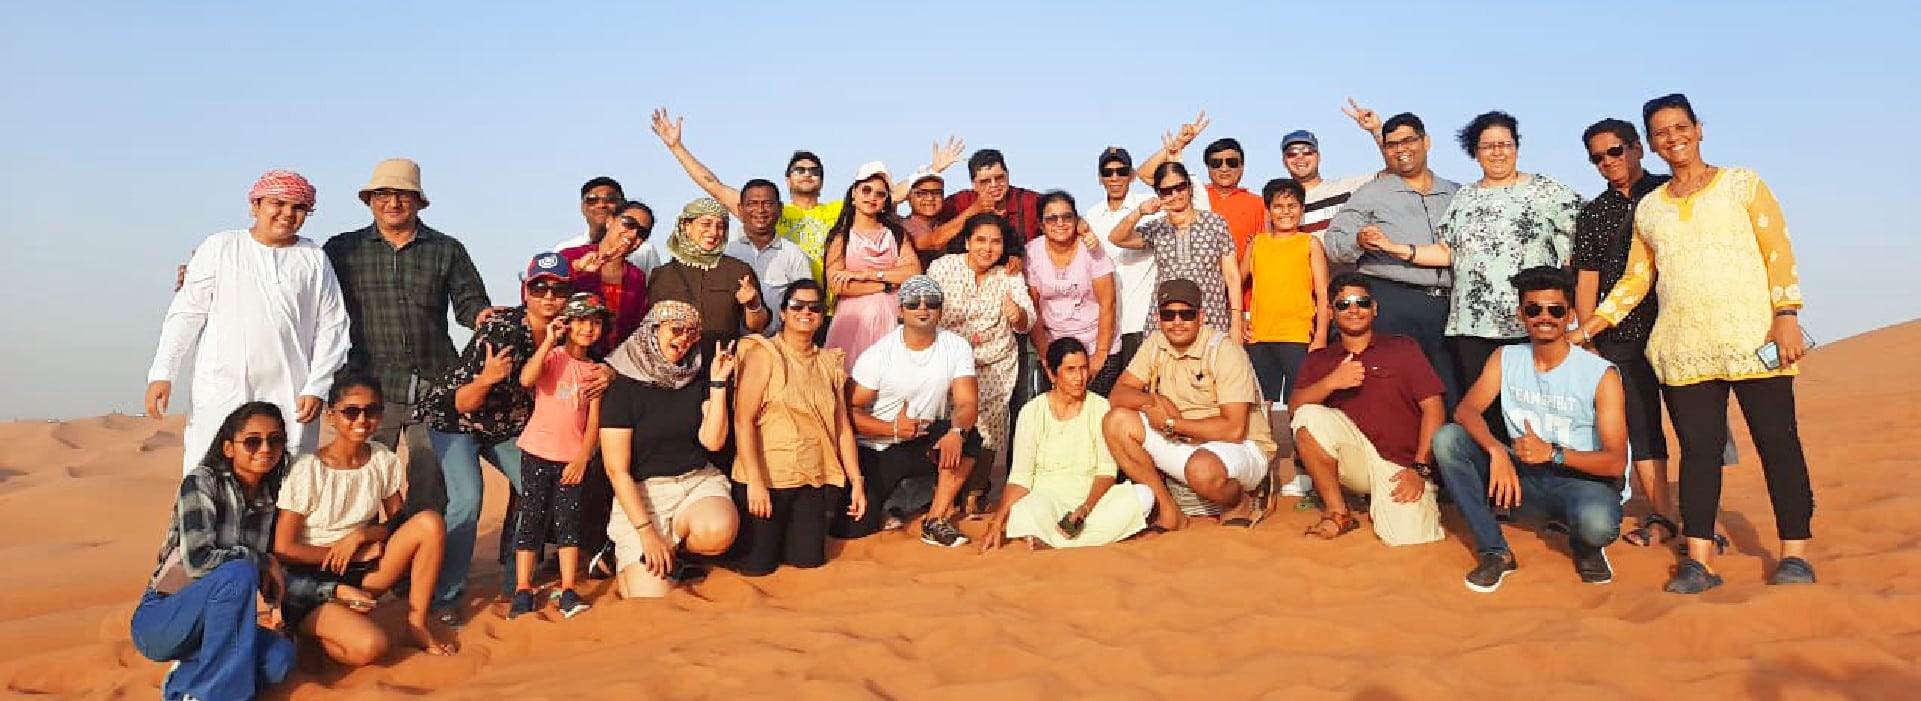 Tourists in Dubai Group Tour posing for the photo after Desert safari